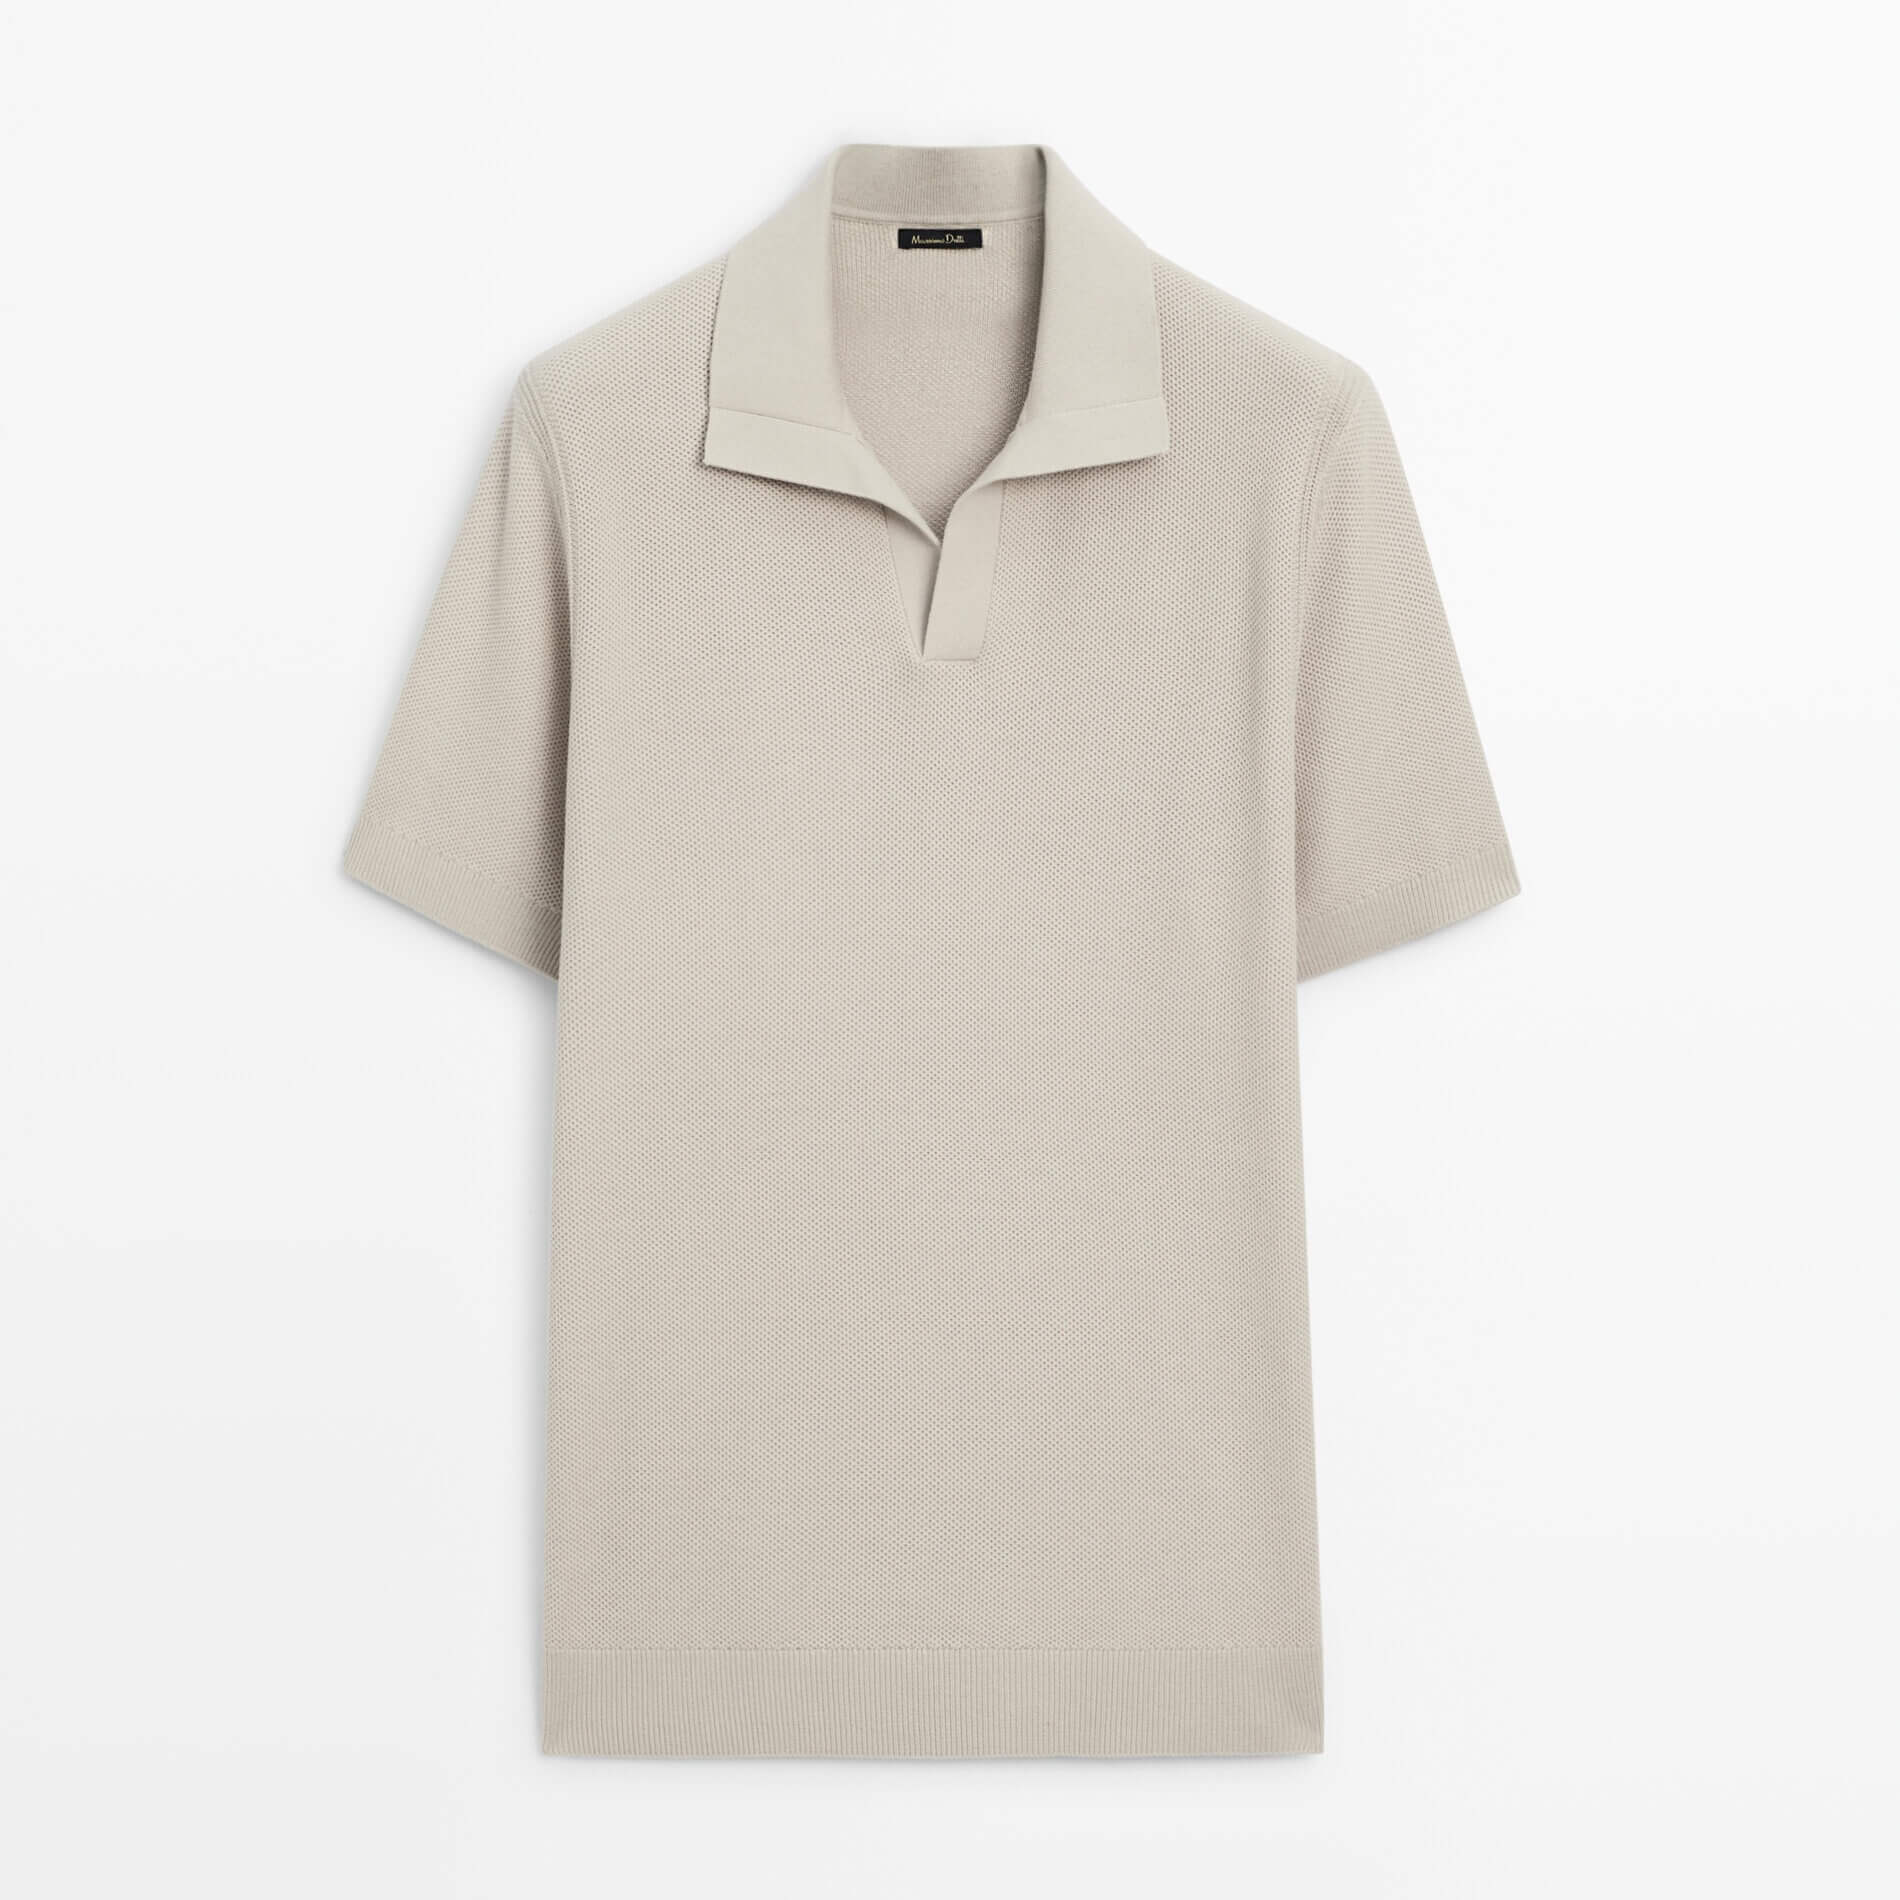 Рубашка поло Massimo Dutti Short Sleeve Cotton Knit, бежевый